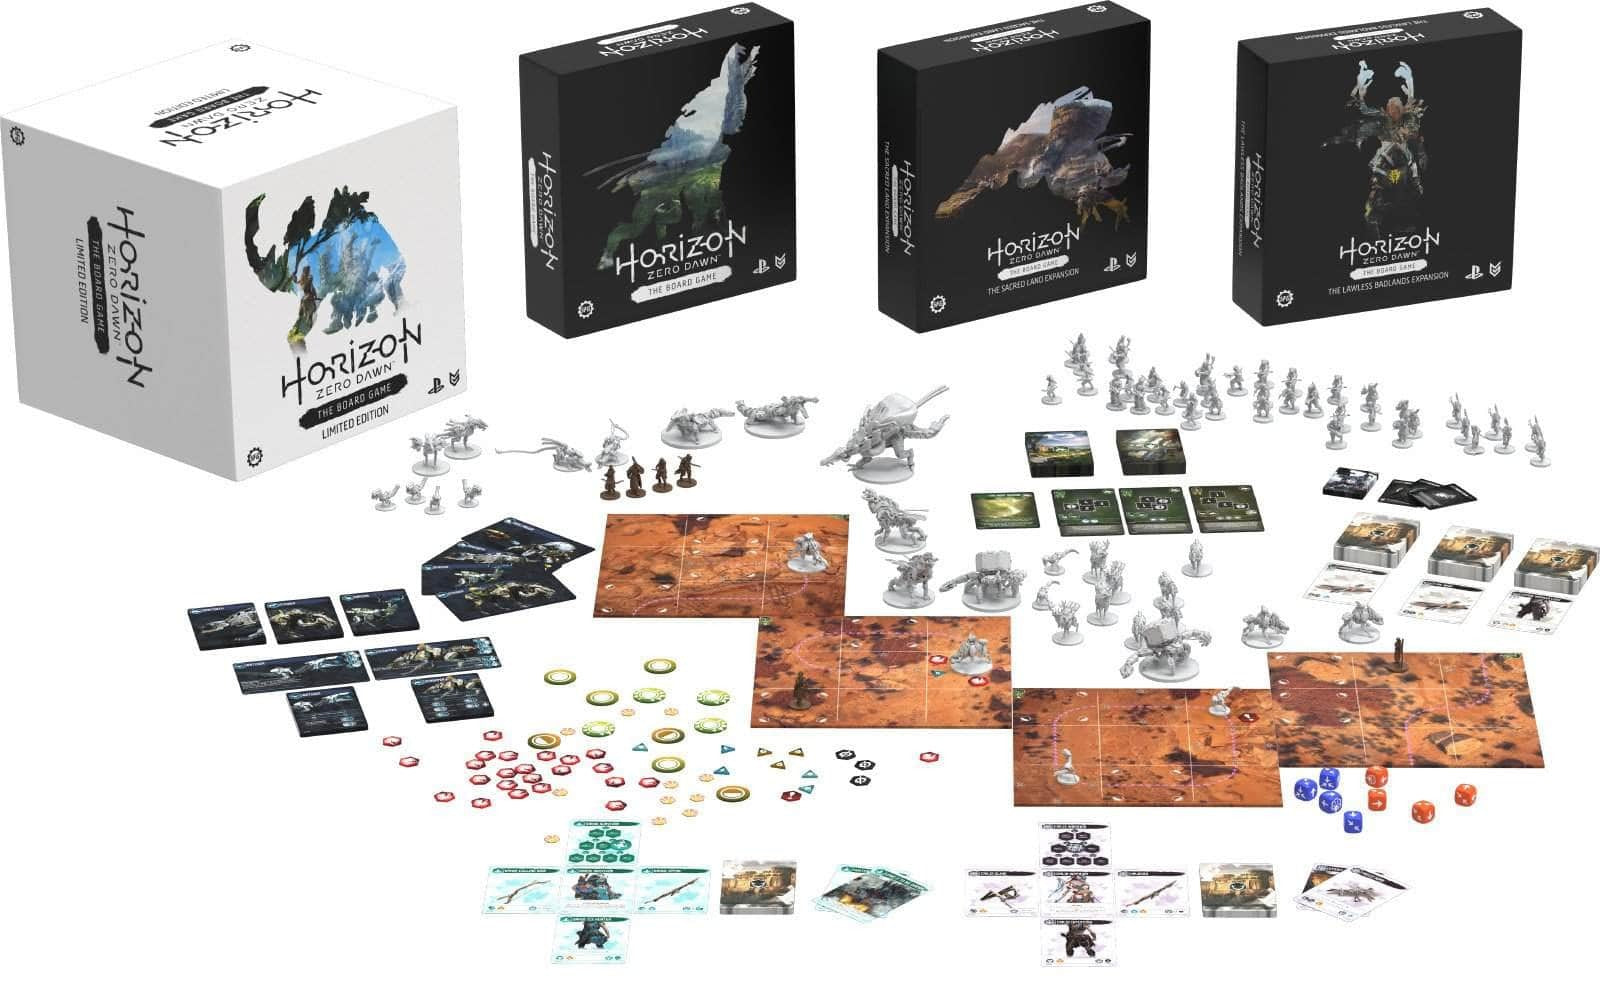 Horizon Zero Dawn™: The Board Game